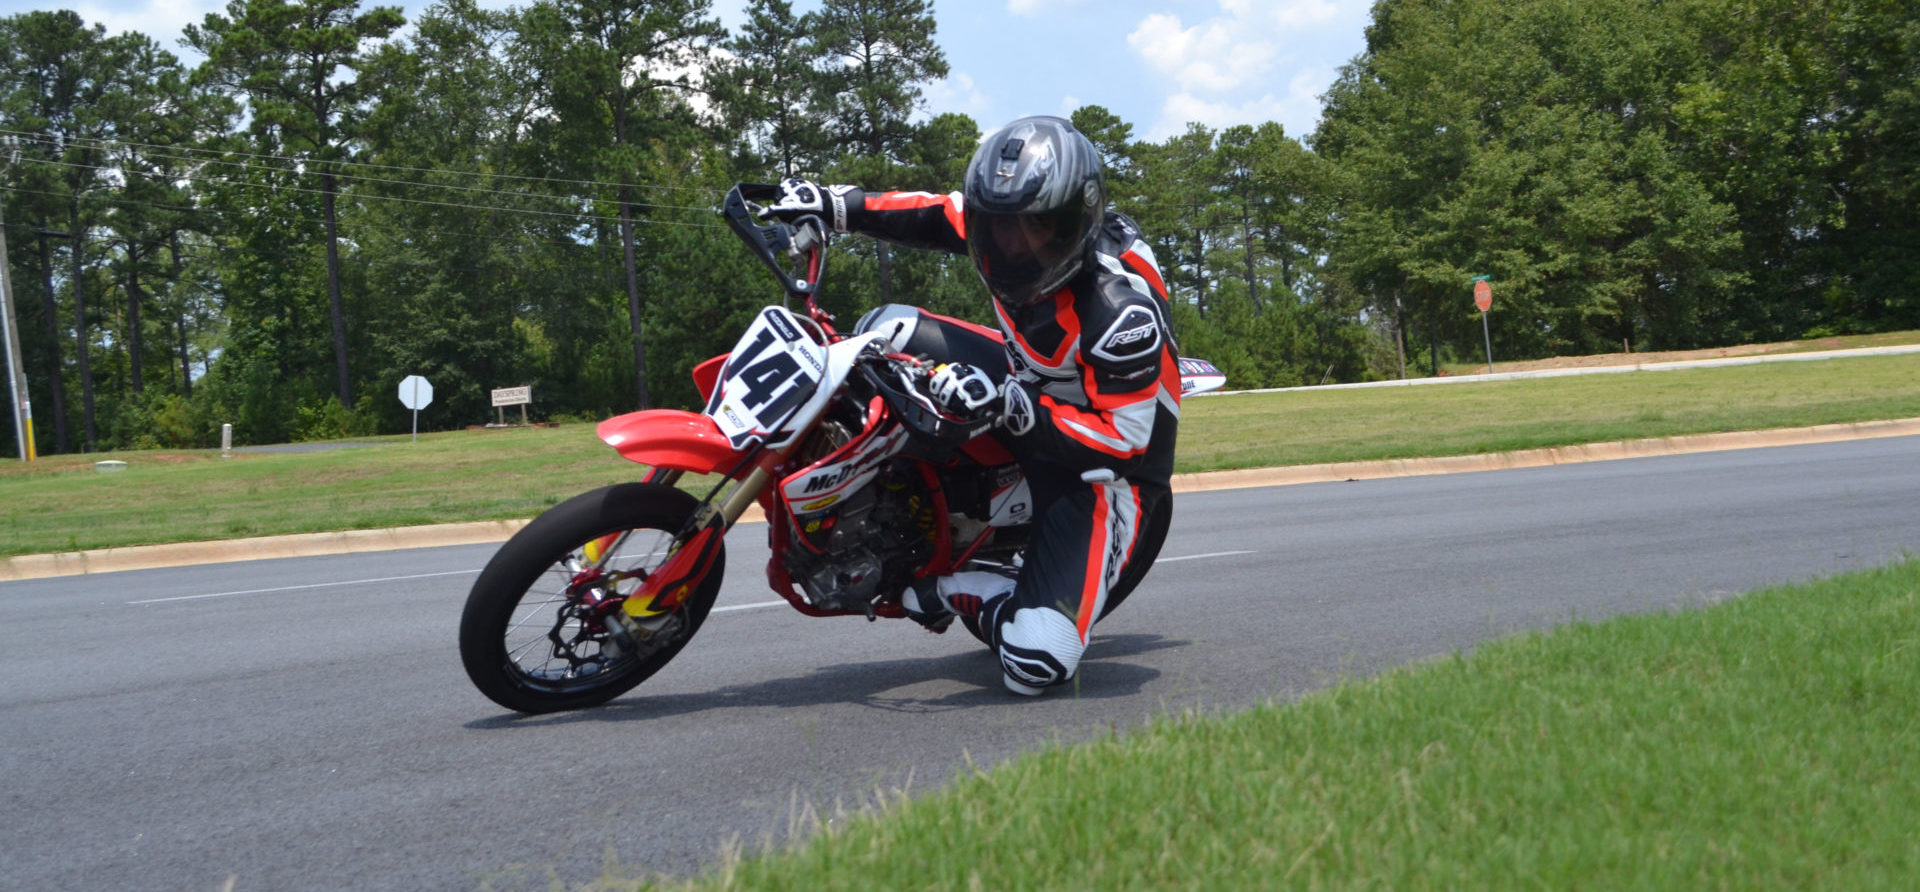 Mini Motorcycle Racing With Southeast Mini Moto 